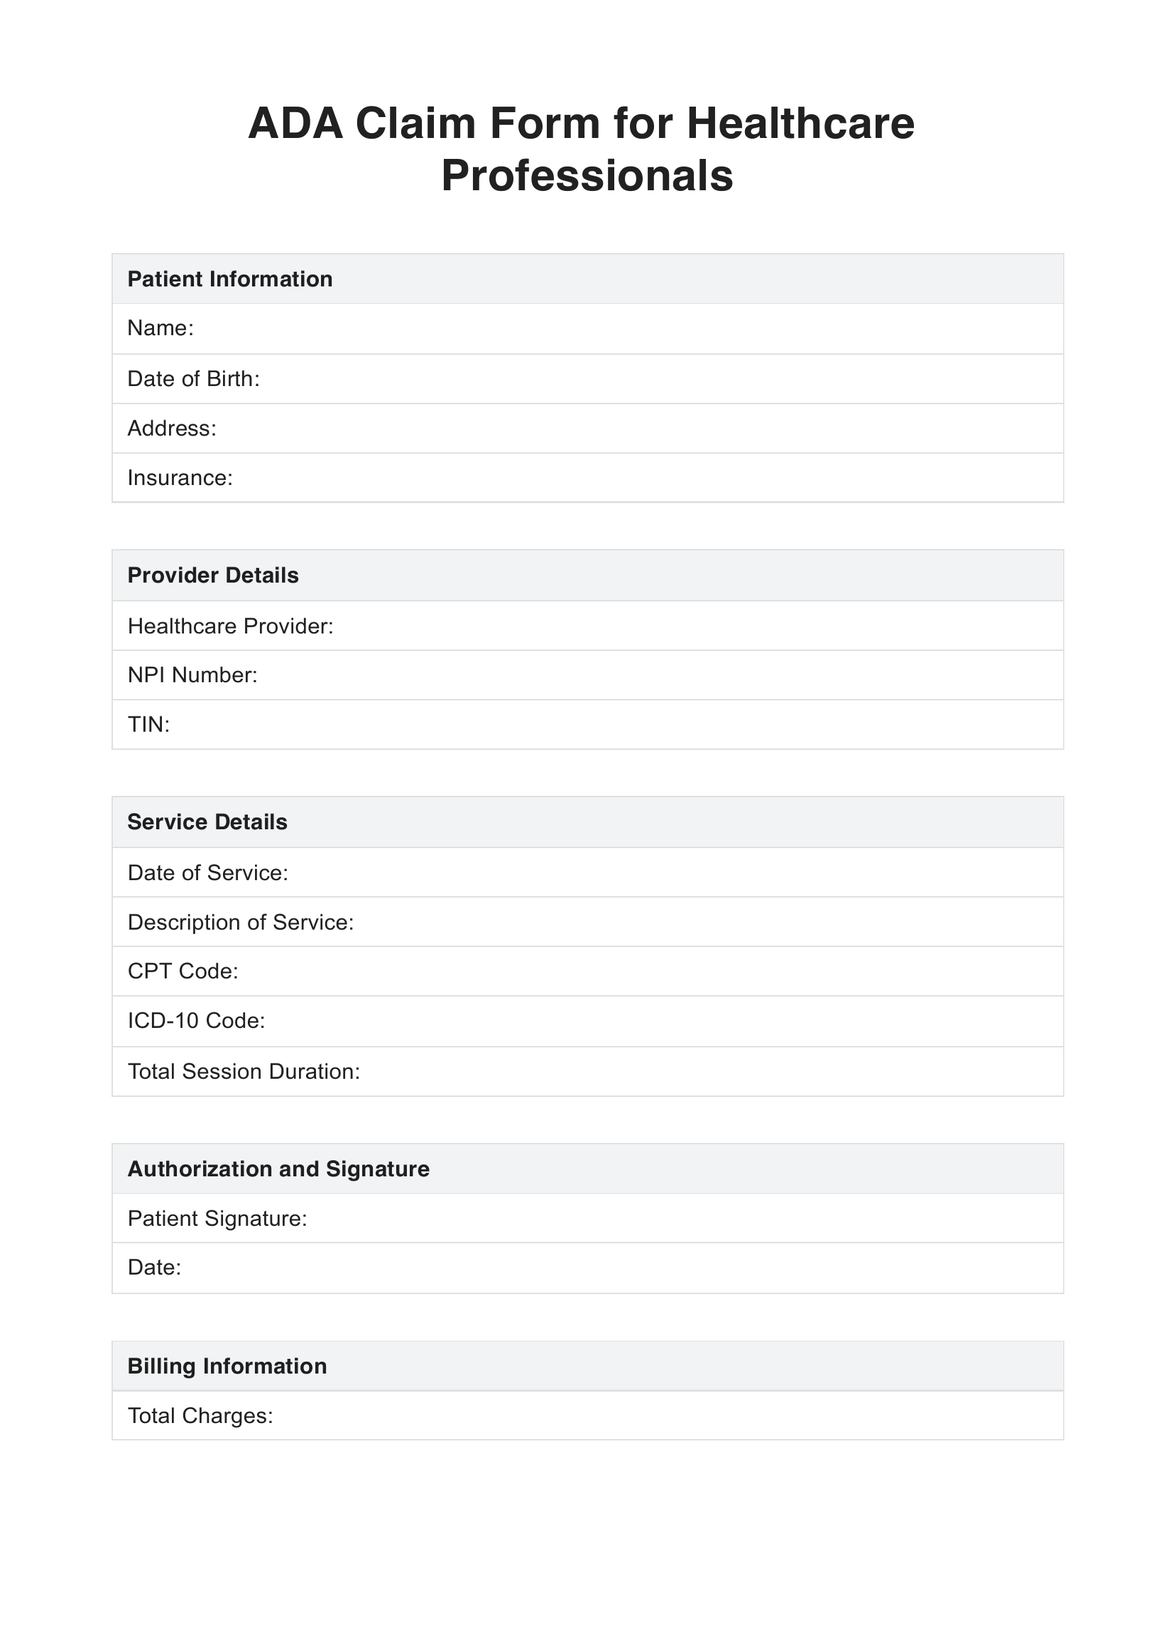 ADA Claim Forms PDF Example